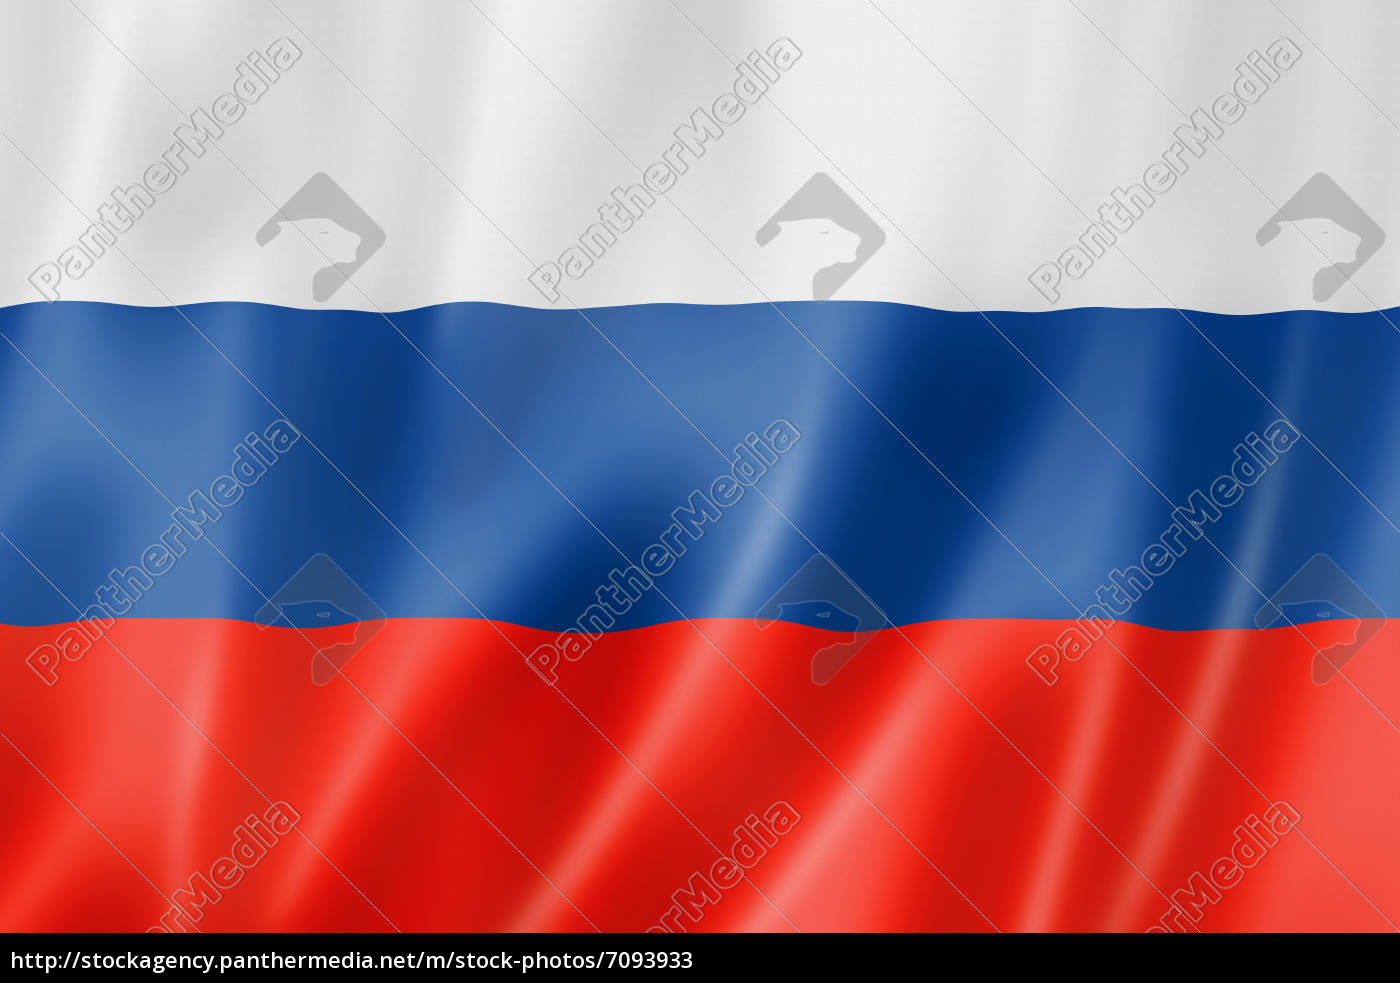 russische flagge - Lizenzfreies Bild #7093933